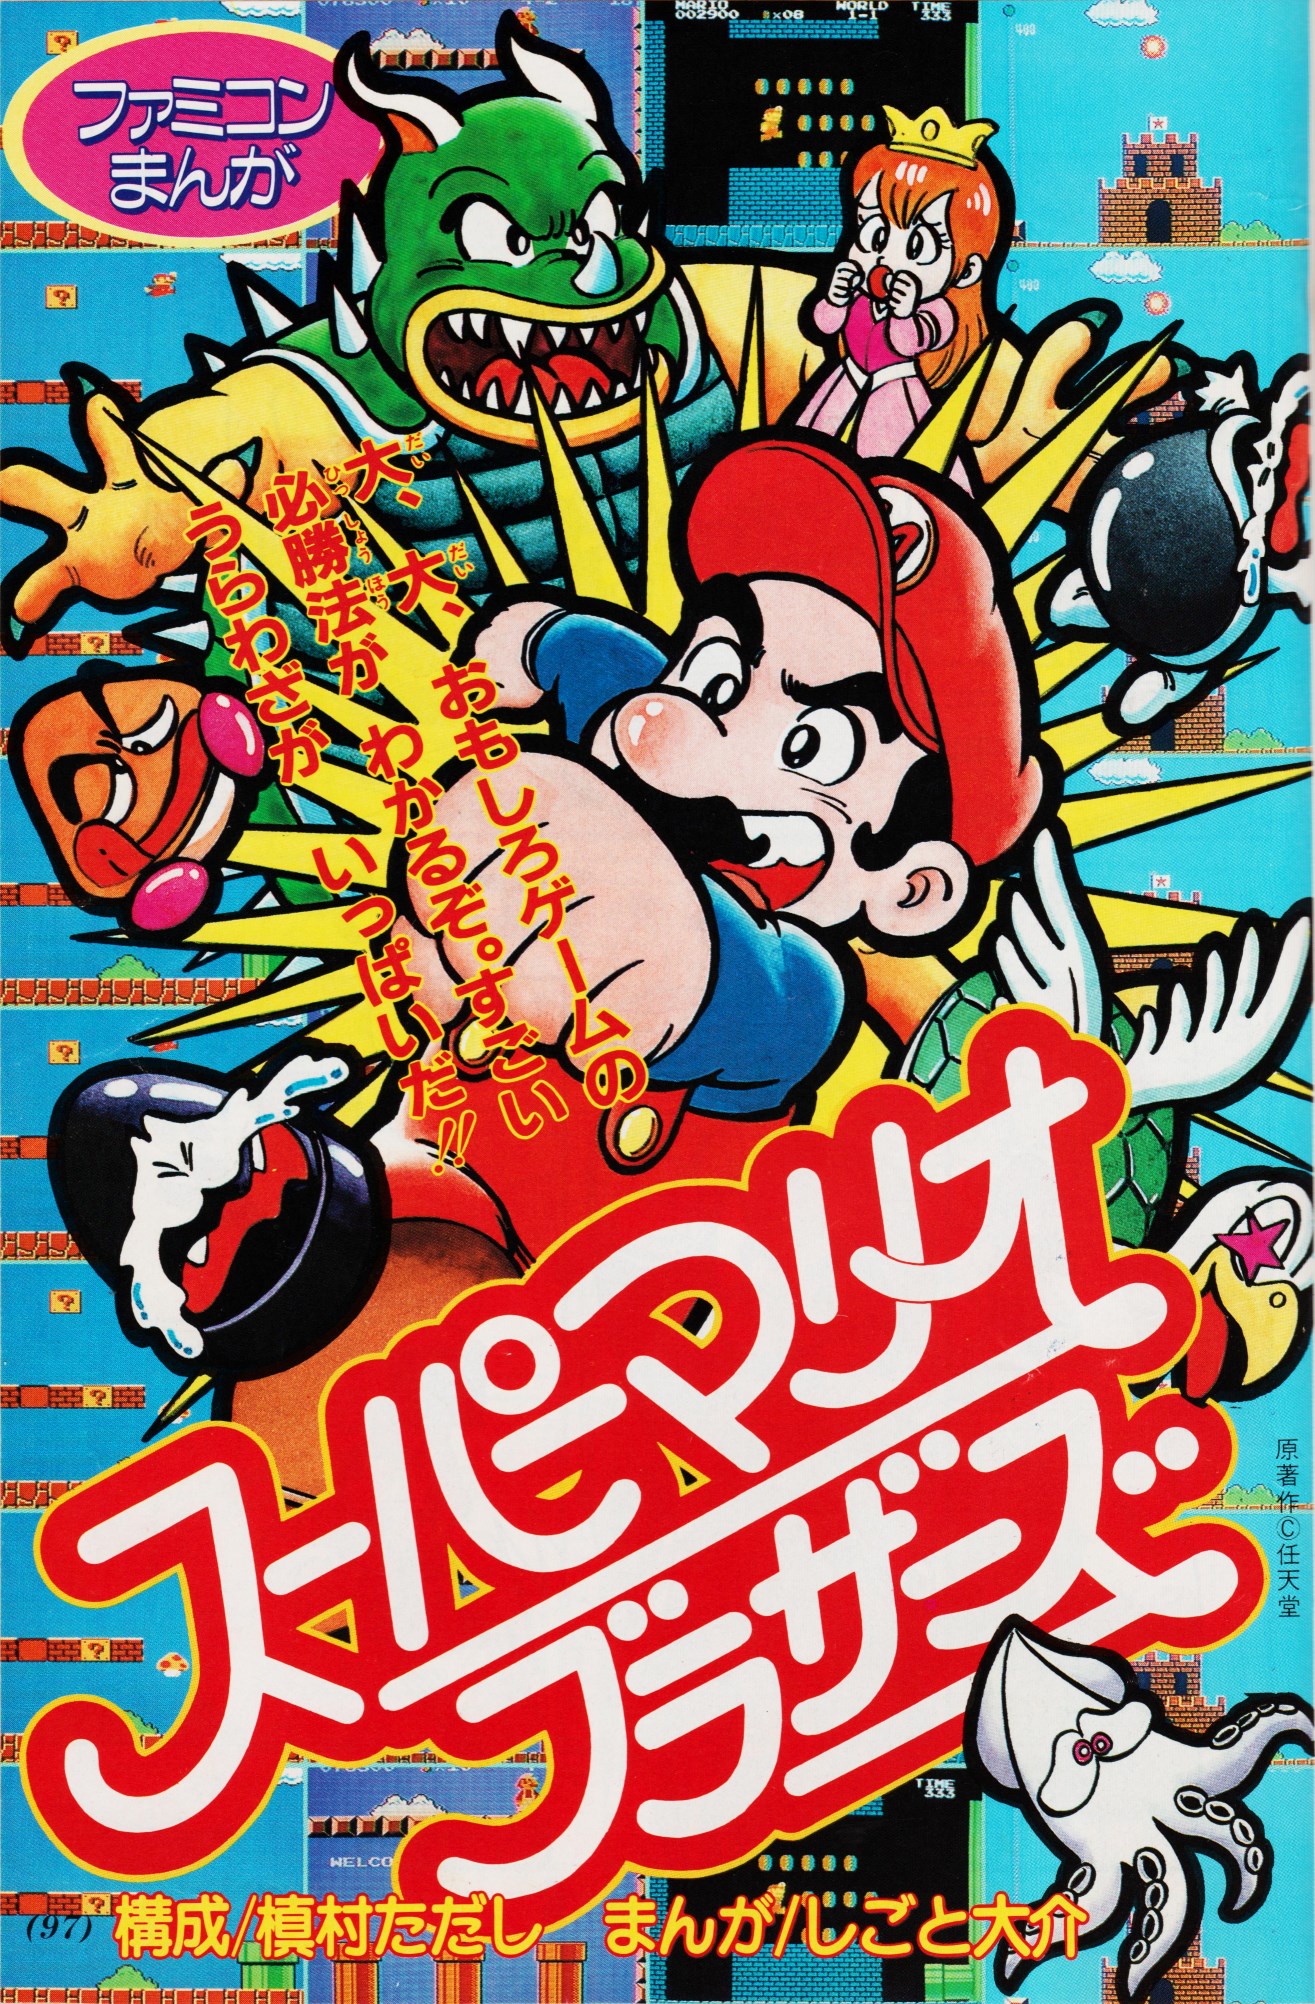 NES Manga: Super Mario Bros. cover 0